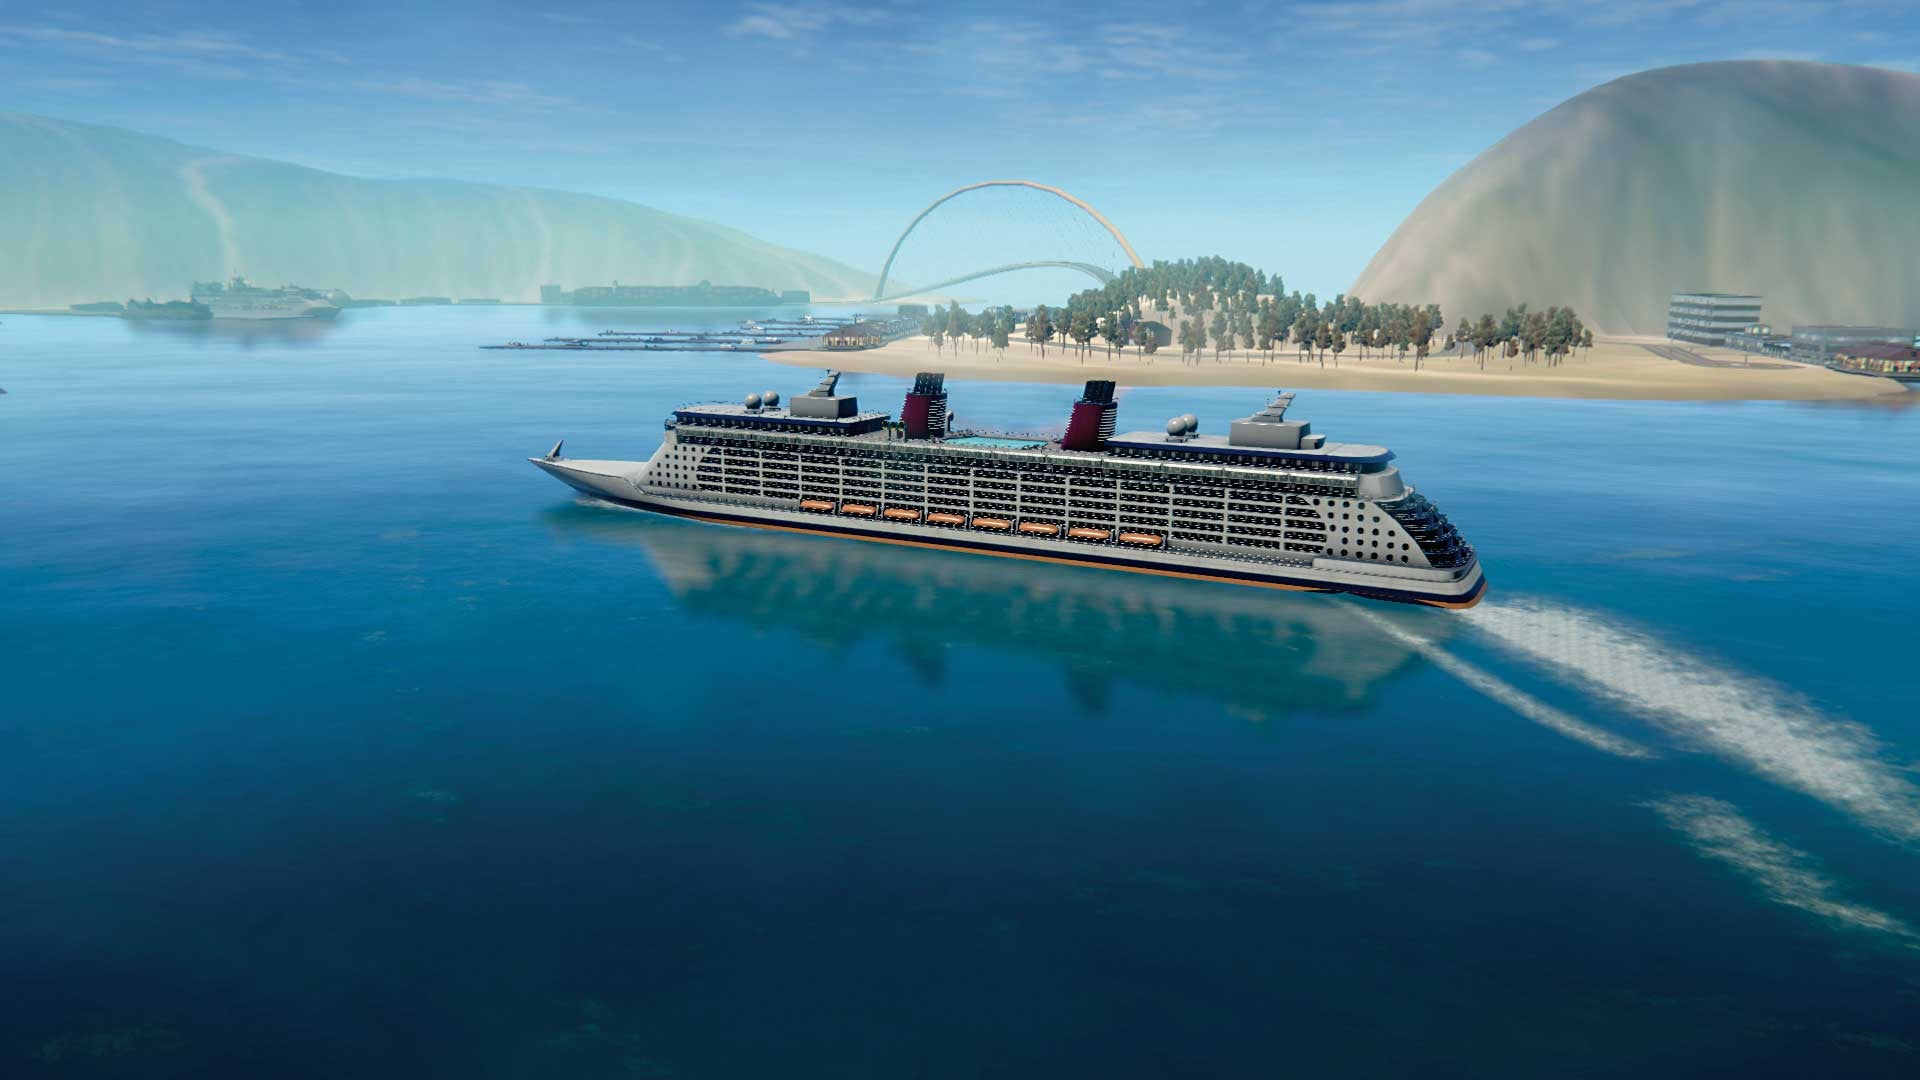 ship simulator game online